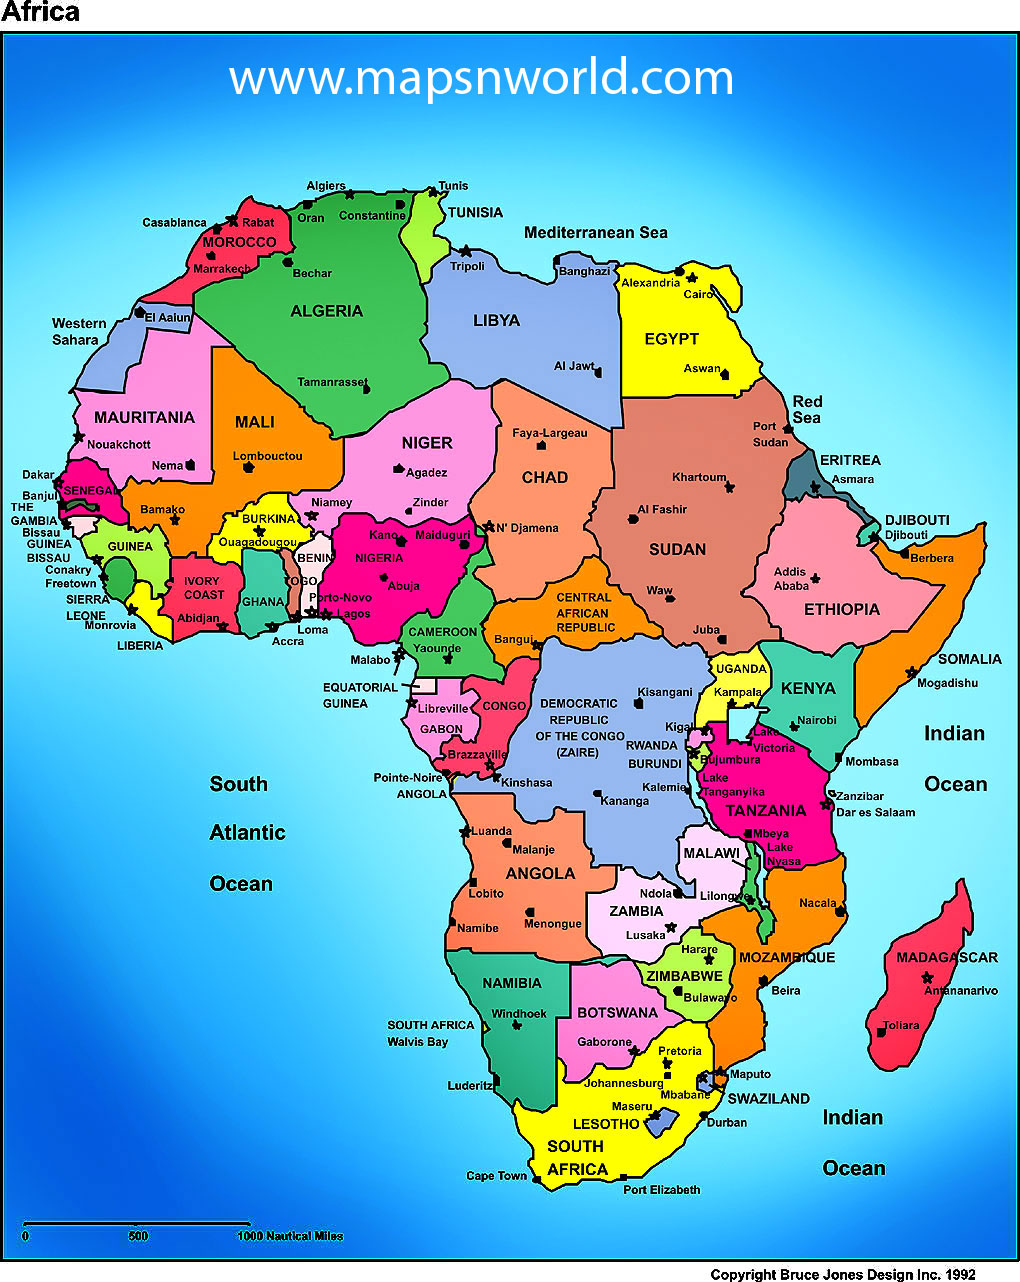 africa-politic-map.jpg